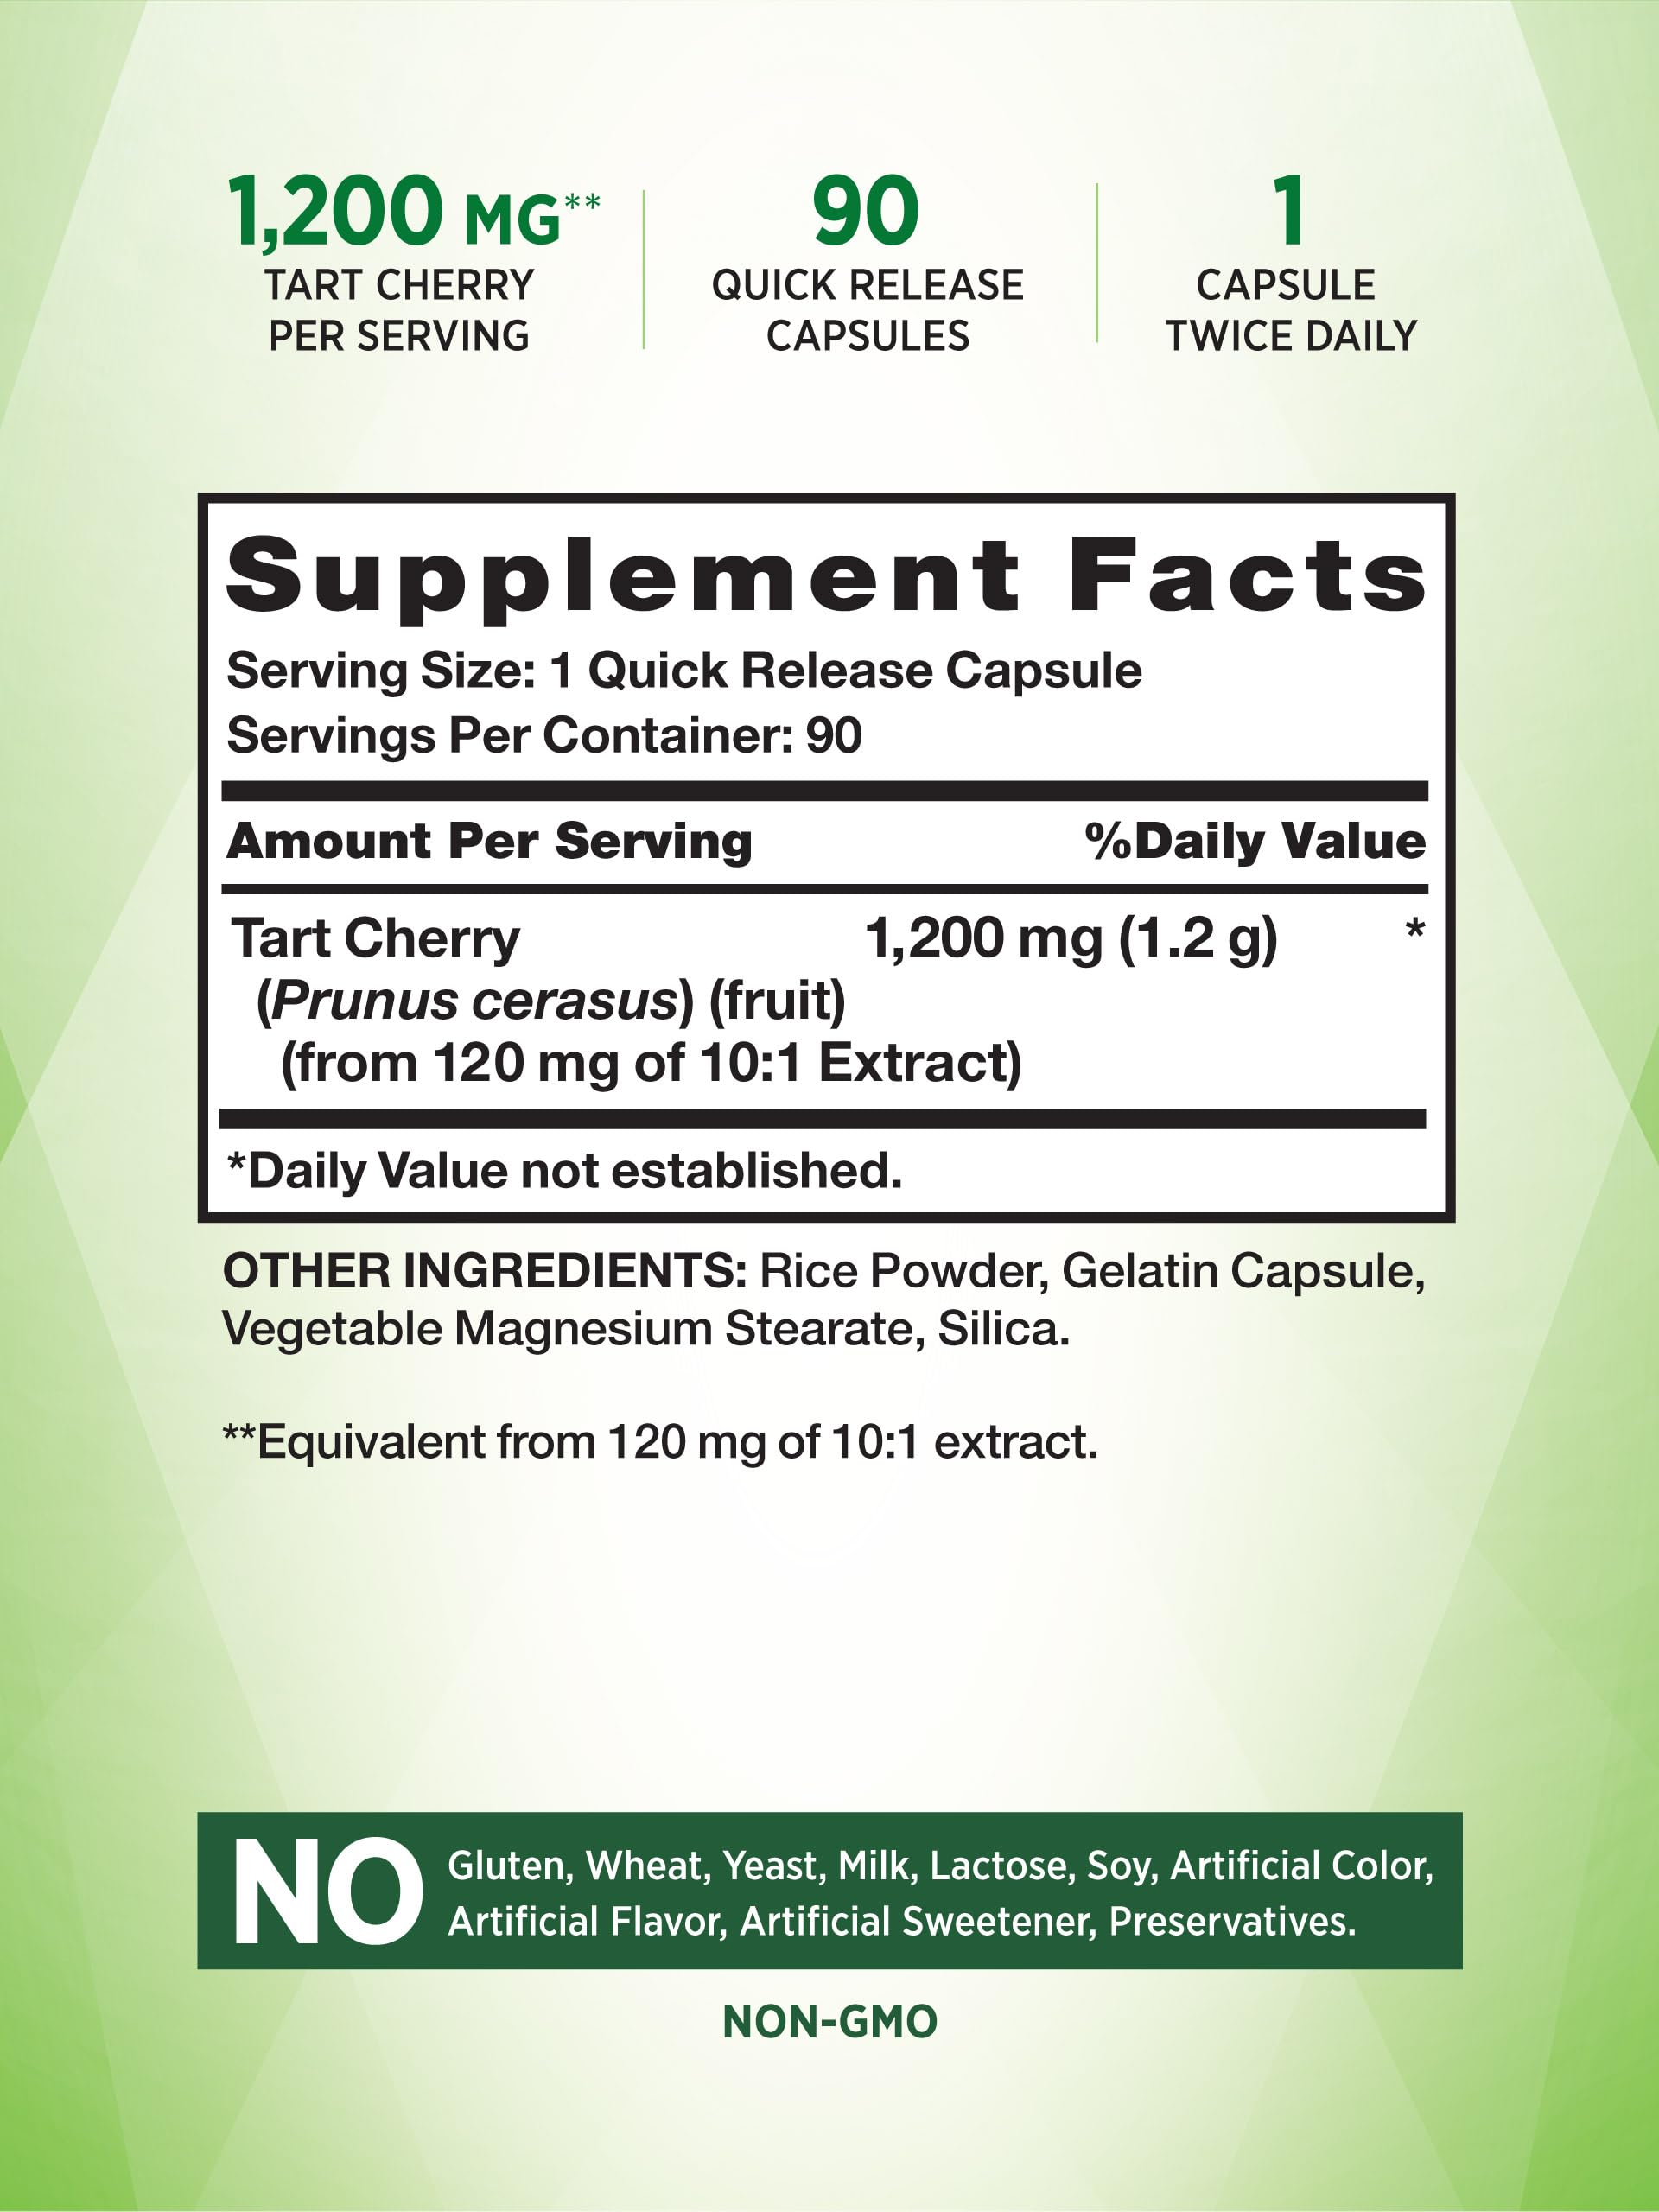 Tart Cherry Extract Capsules 1200 mg 90 Count